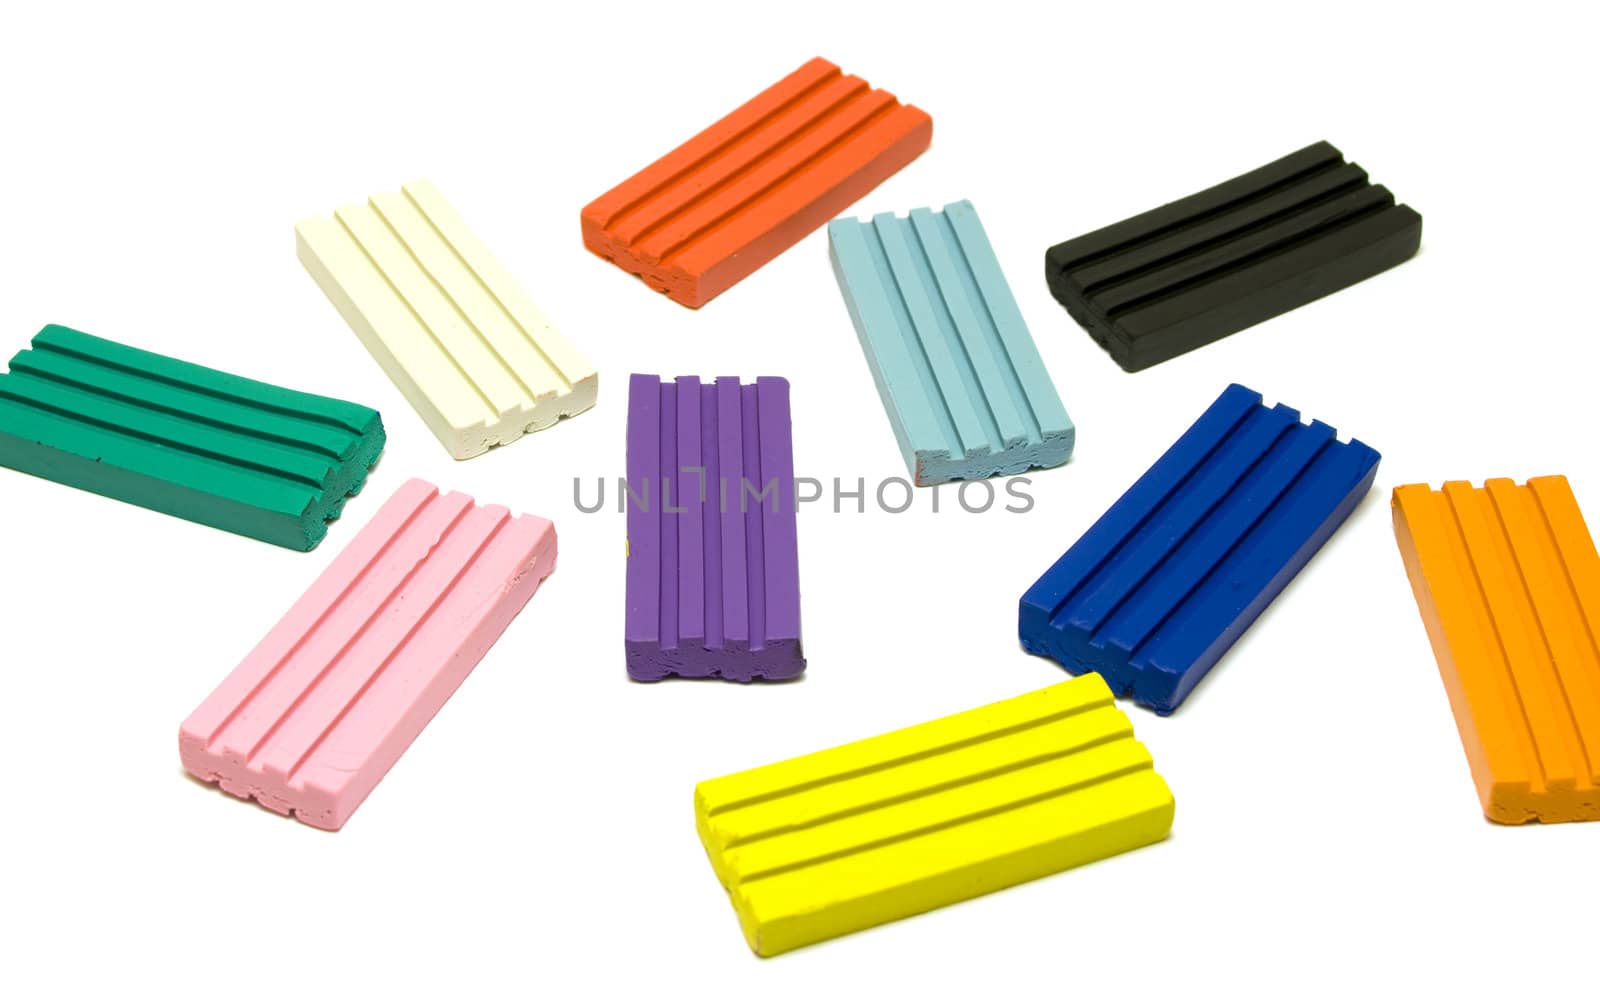 Plasticine bricks by ursolv